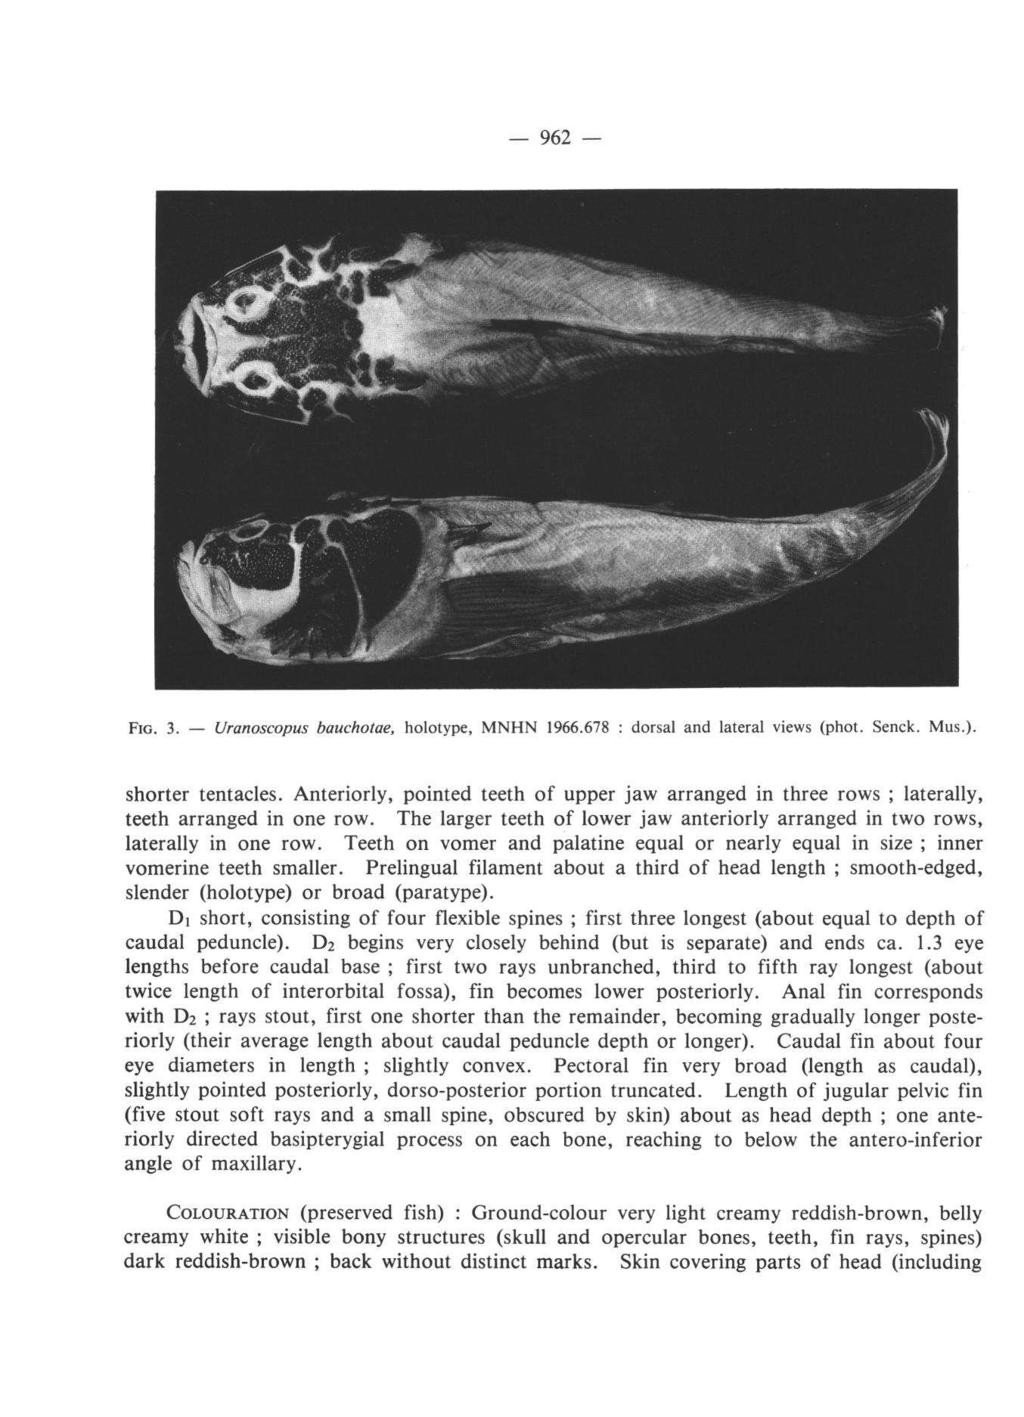 FIG. 3. Uranoscopus bauchotae, holotype, MNHN 1966.678 : dorsal and lateral views (phot. Senck. Mus.). shorter tentacles.